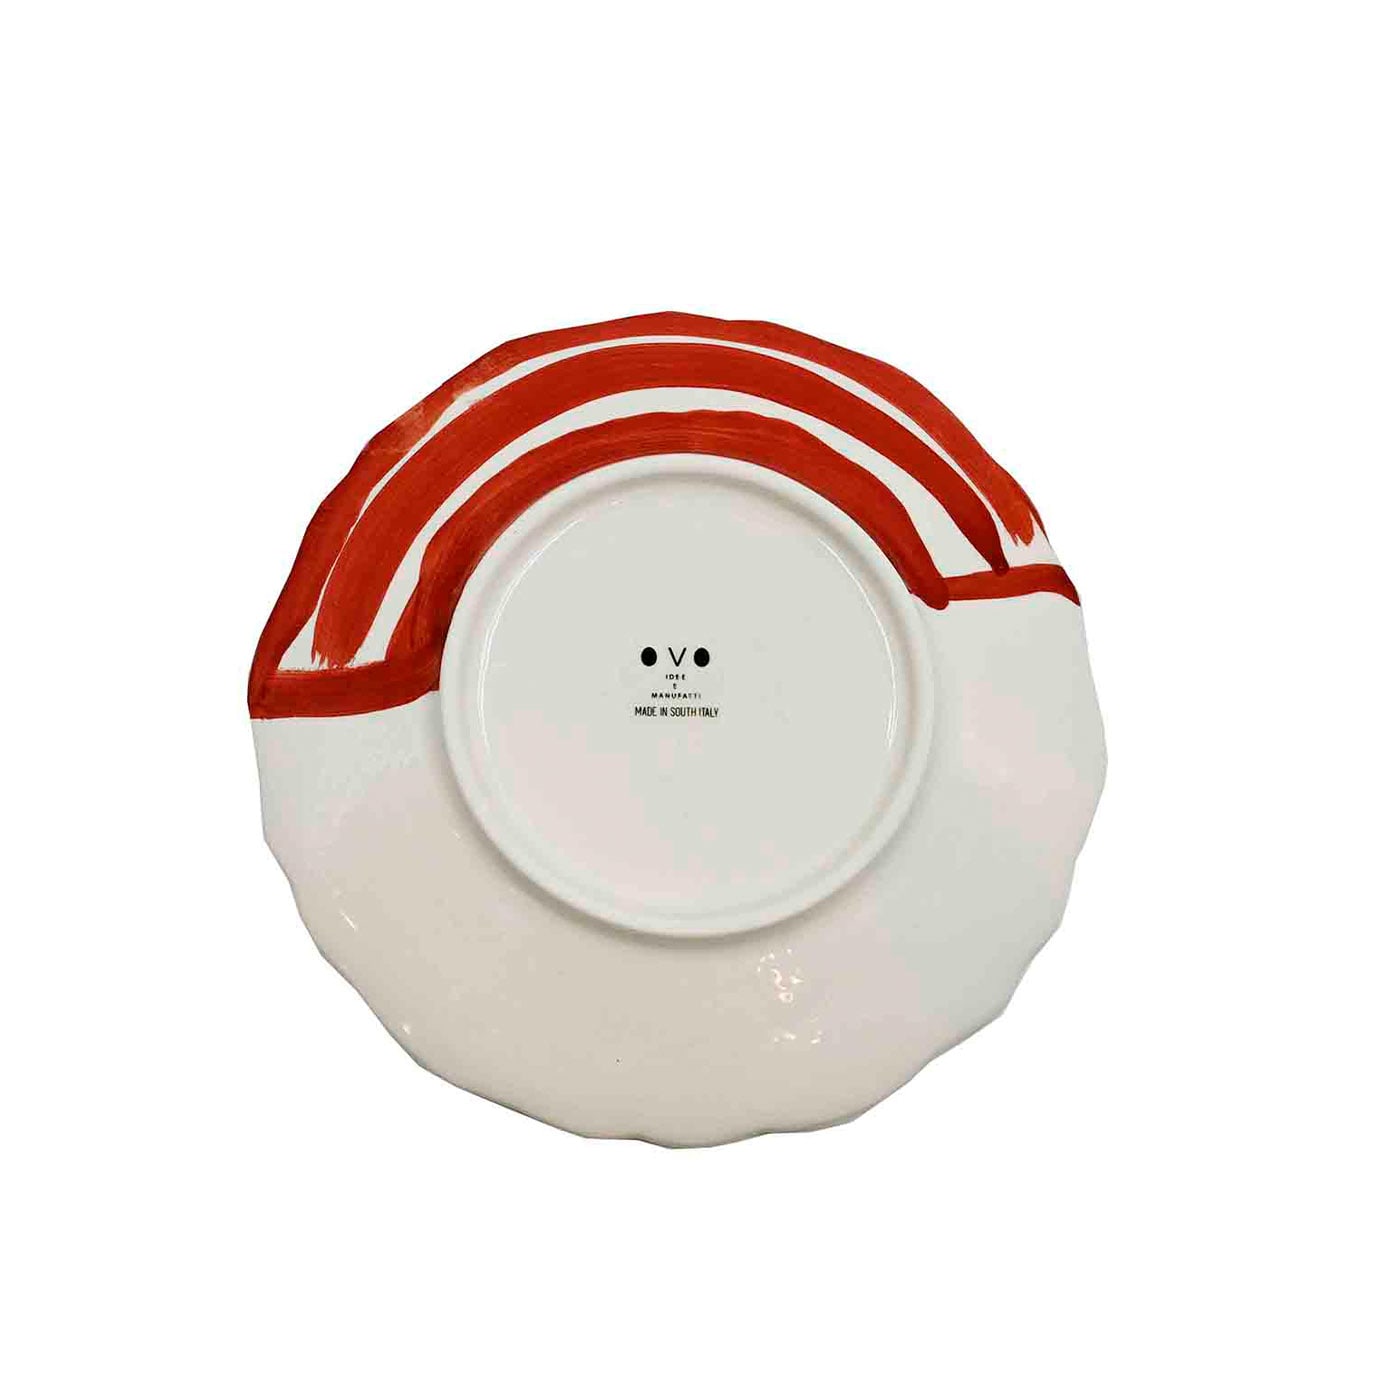 Italian Handcrafted Ceramic Artisan Plate